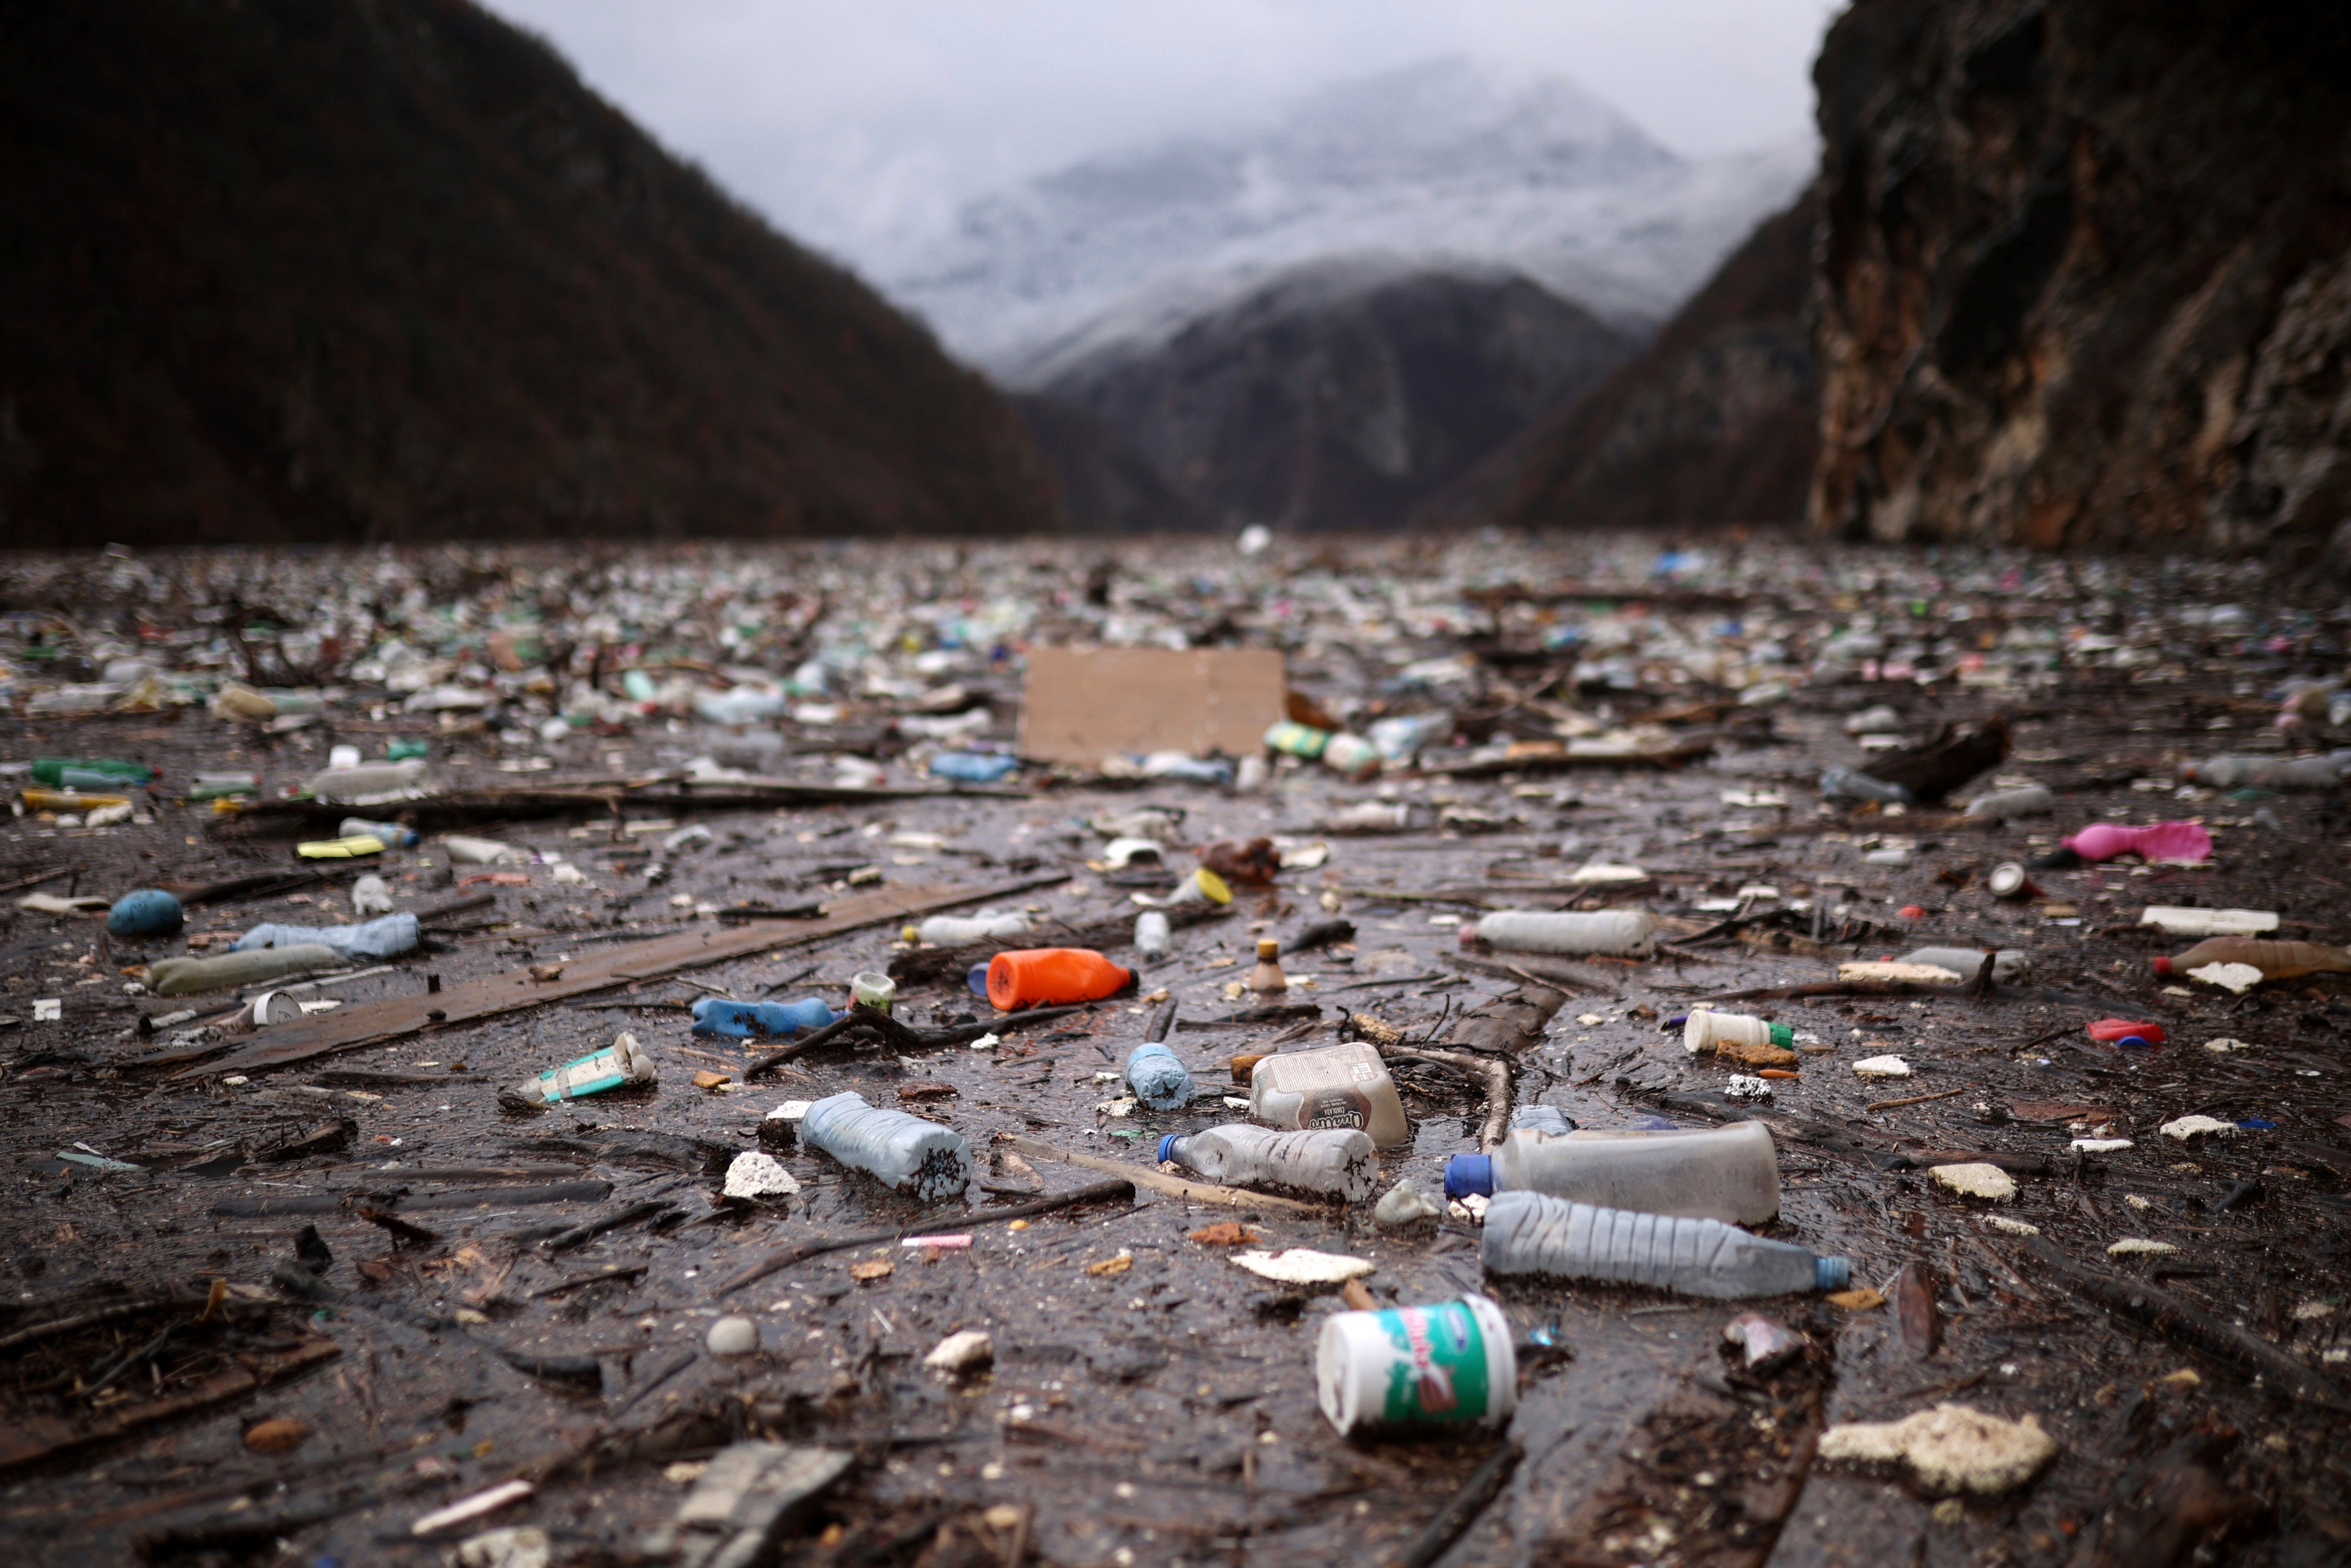 Bottles and other plastic paraphernalia lie in the trash heap. (Photo: Armin Durgut, AP)